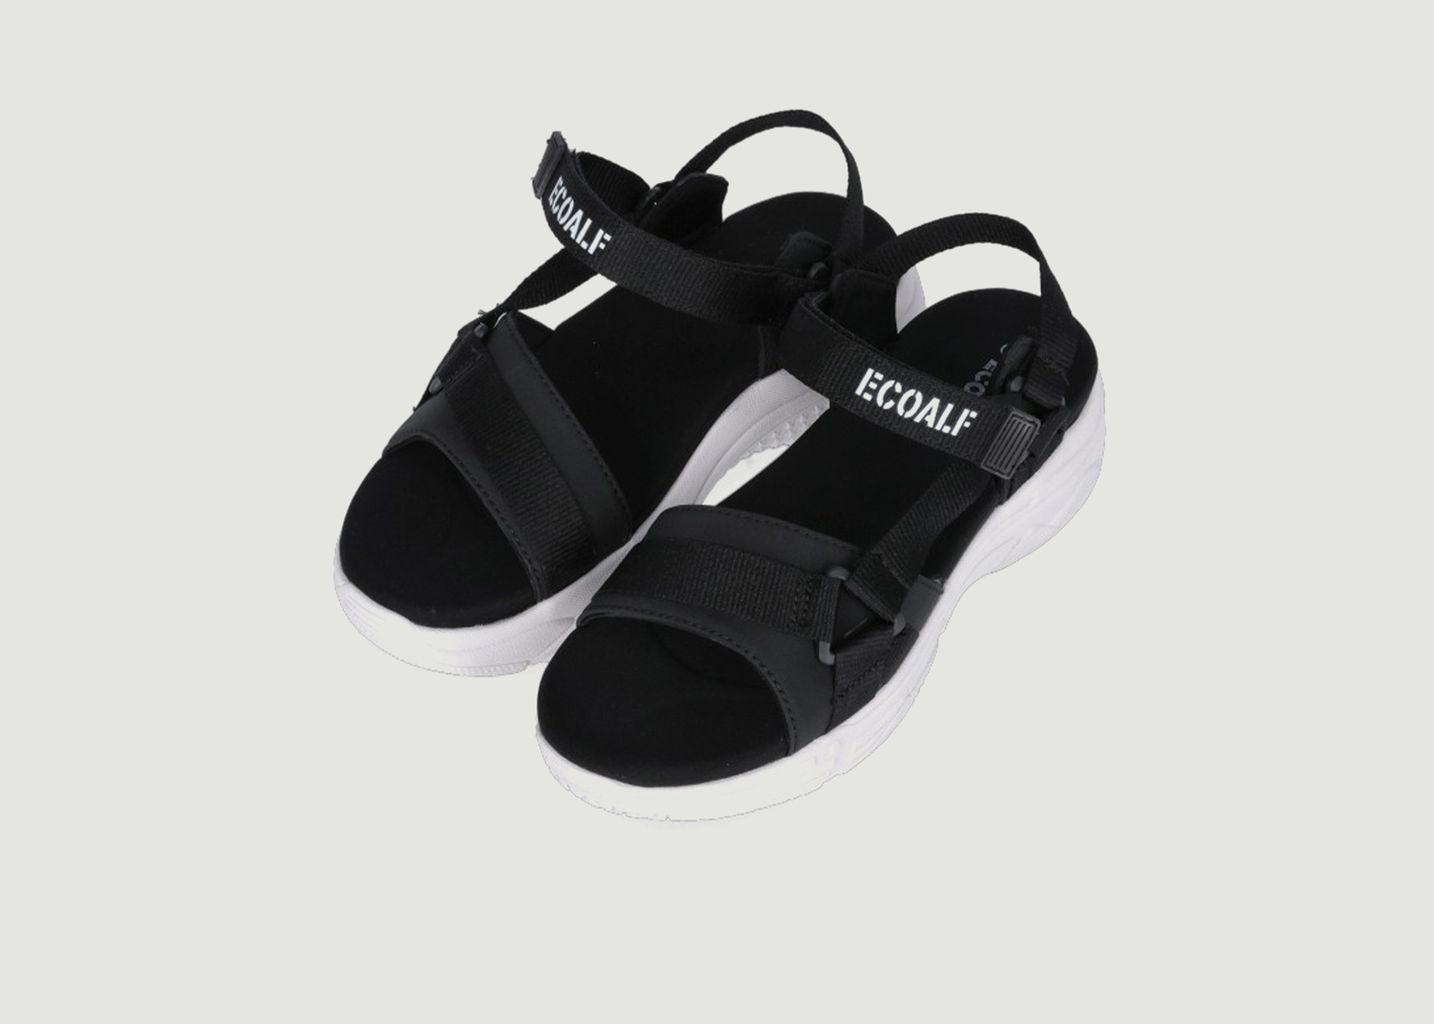 Sofia sandals - Ecoalf